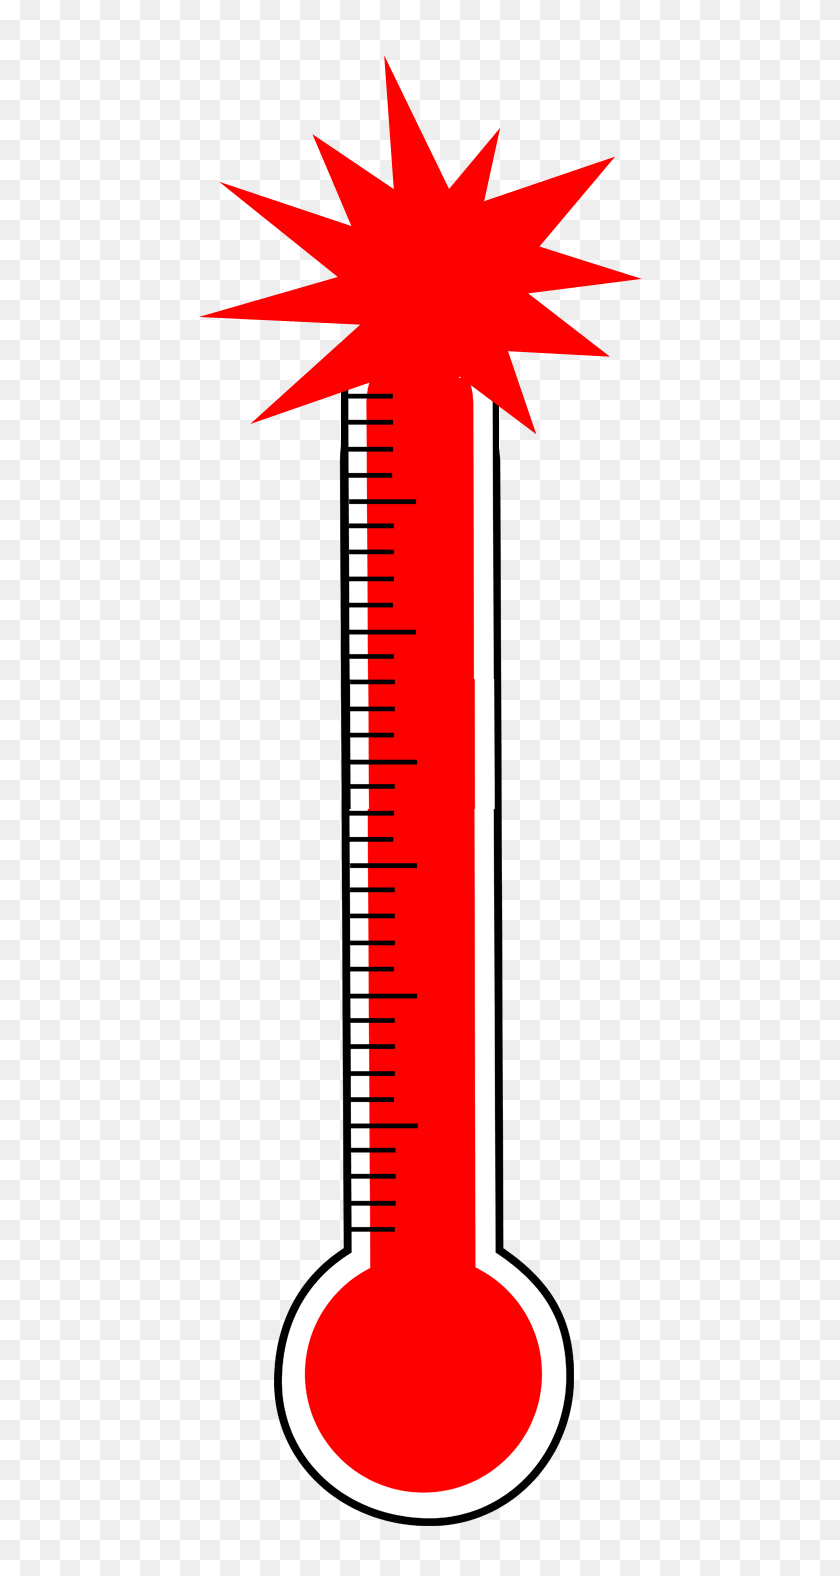 484x1516 Взрывающийся Термометр Картинки, Фото Для Взрывающегося Термометра Gt - Последние Новости Клипарт